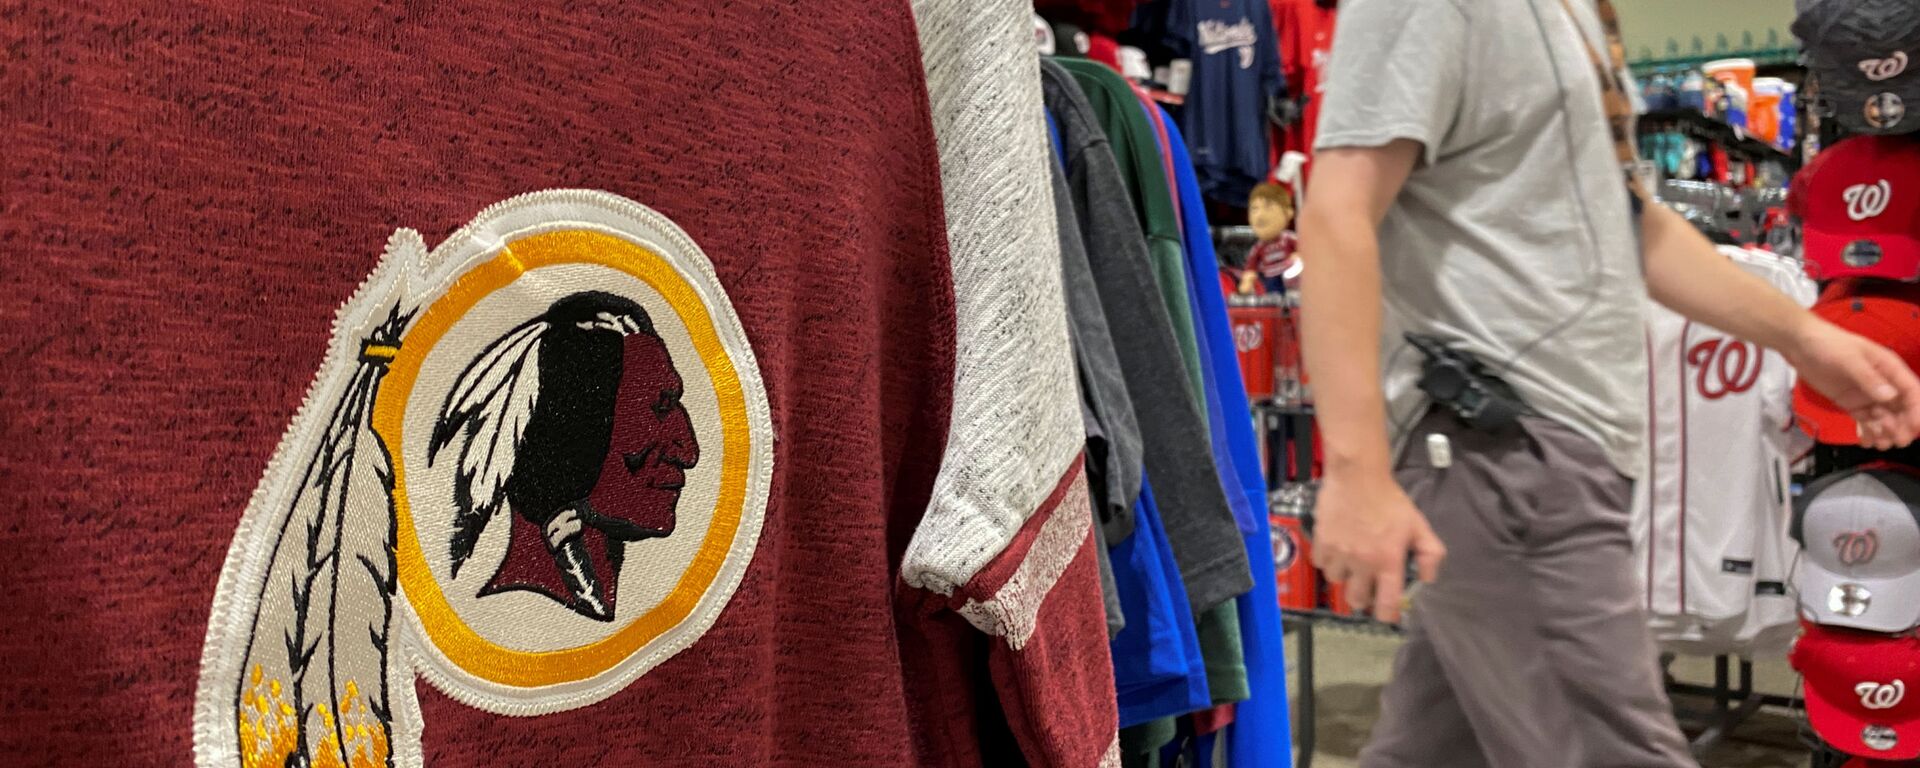 An employee passes a Washington Redskins football shirt for sale at a sporting goods store in Bailey's Crossroads, Virginia, US, 24 June 2020. - Sputnik International, 1920, 13.07.2020